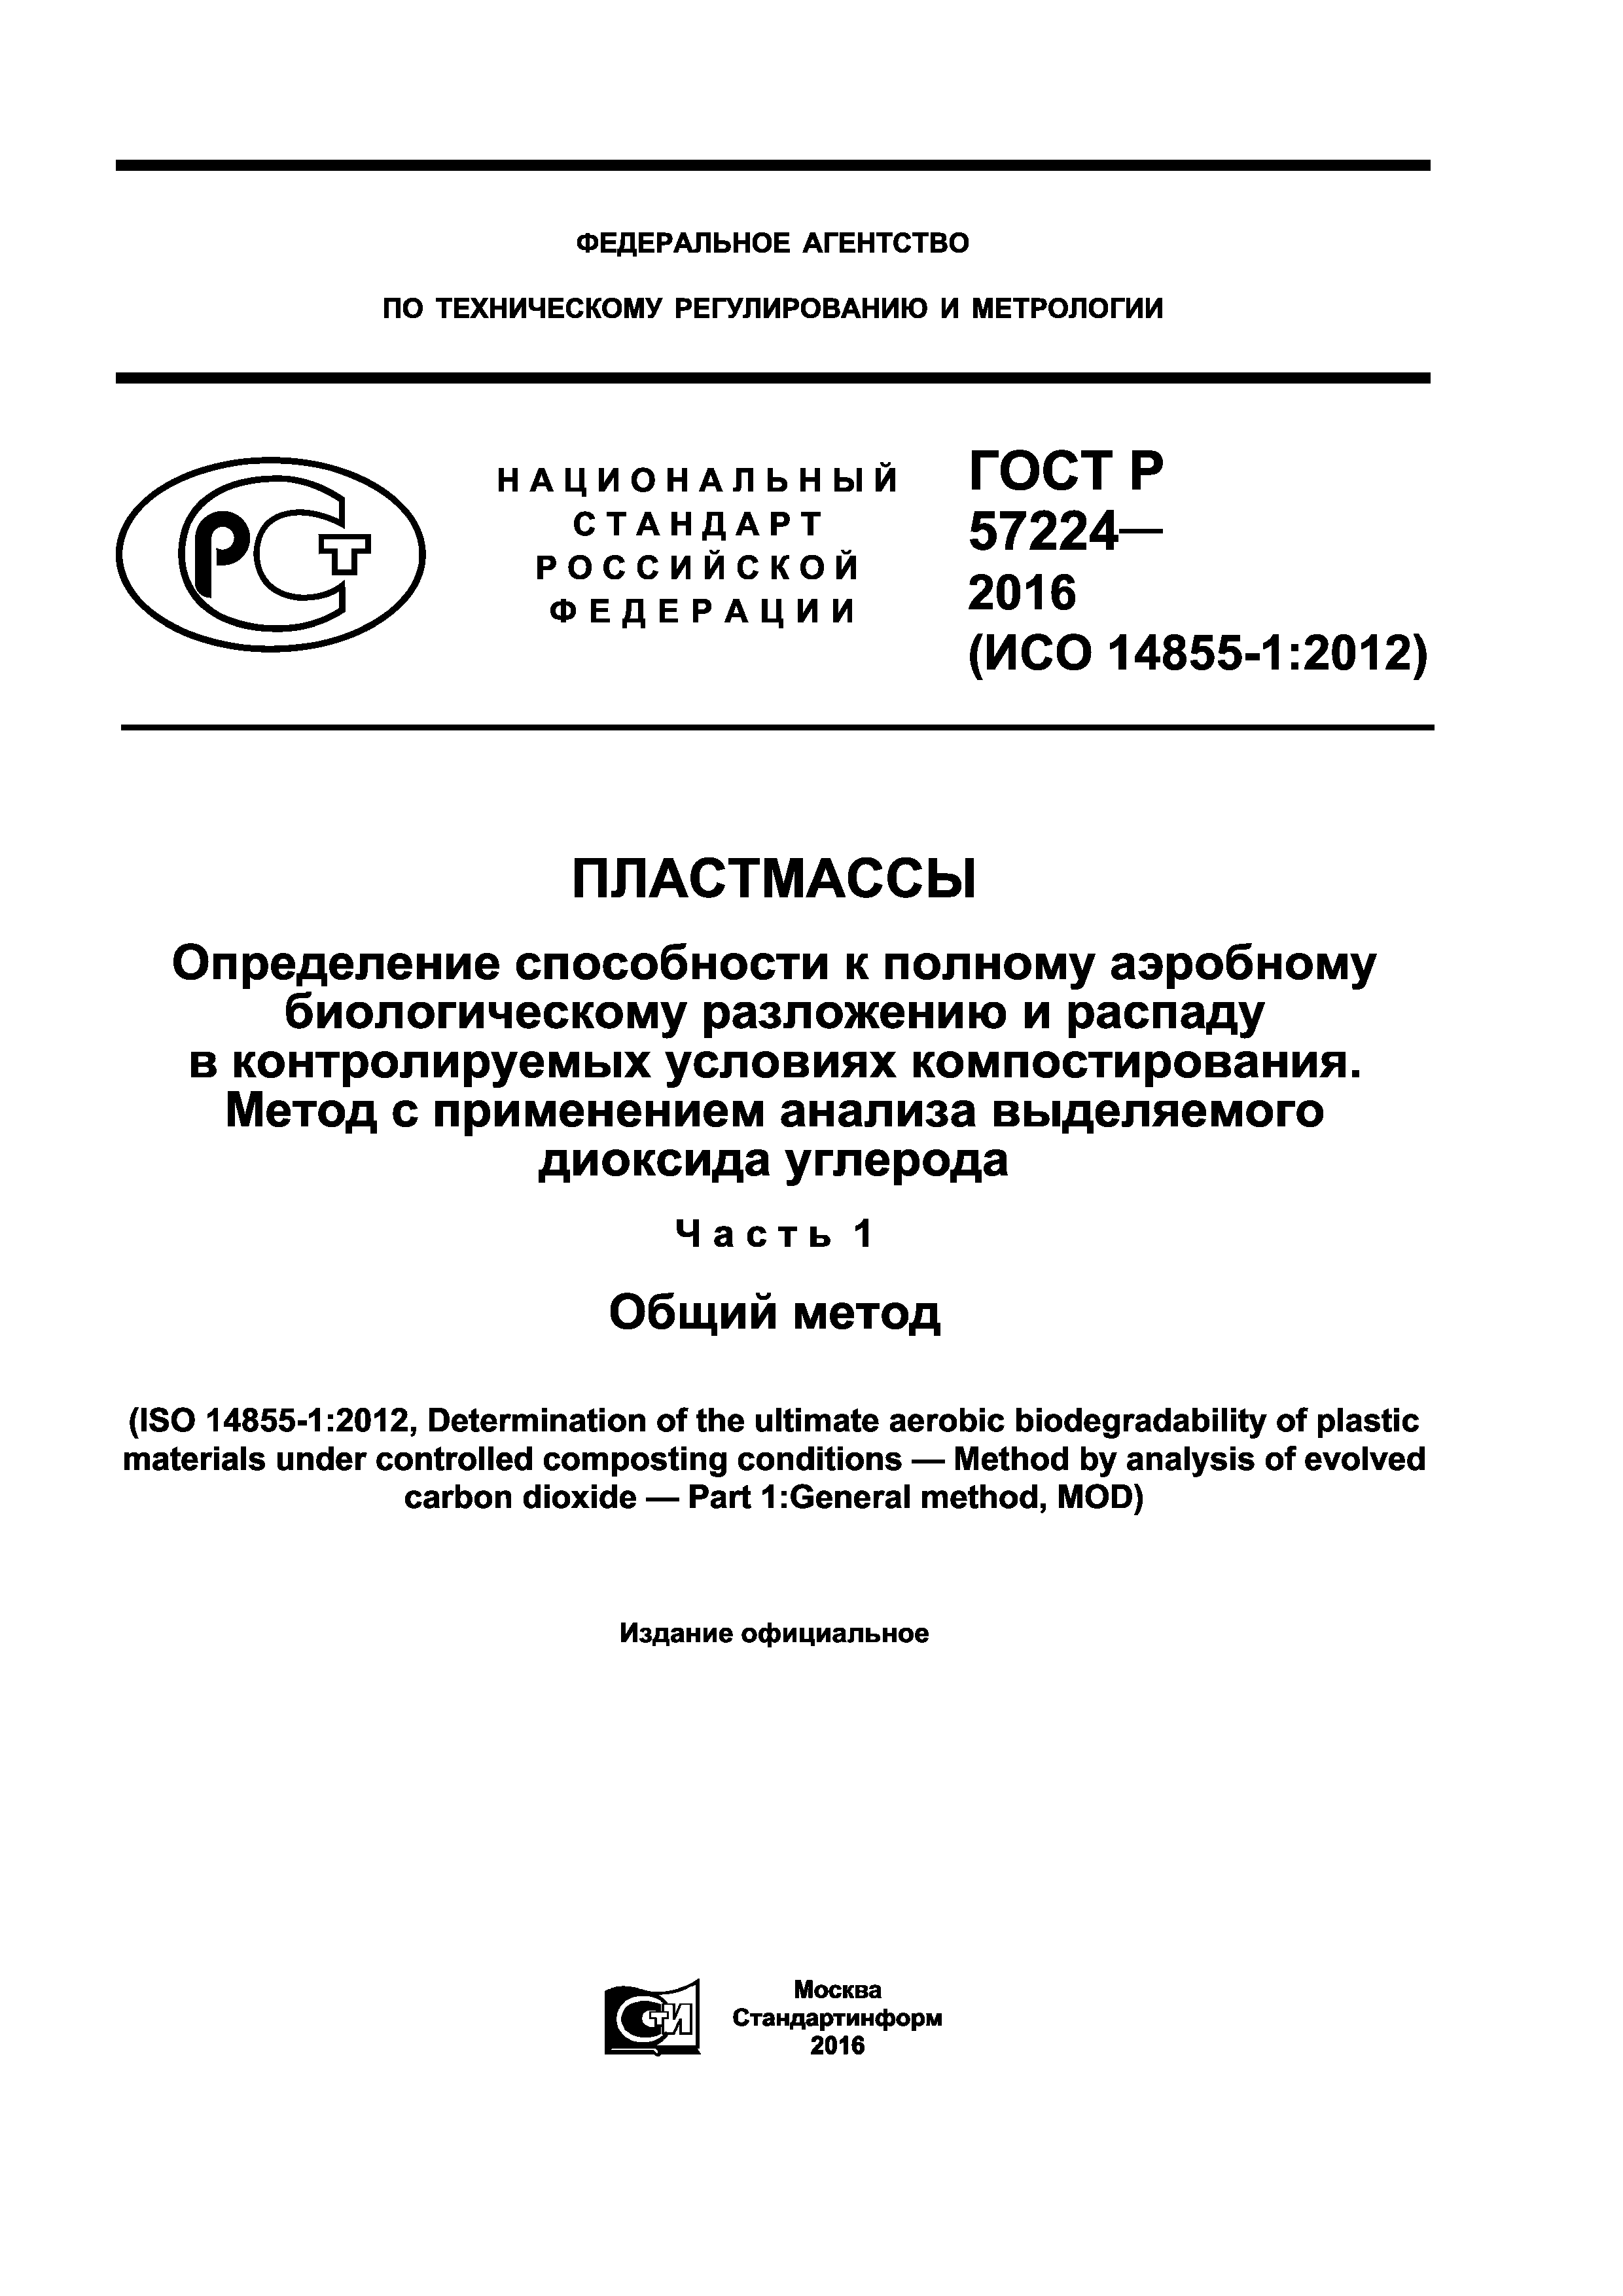 ГОСТ Р 57224-2016